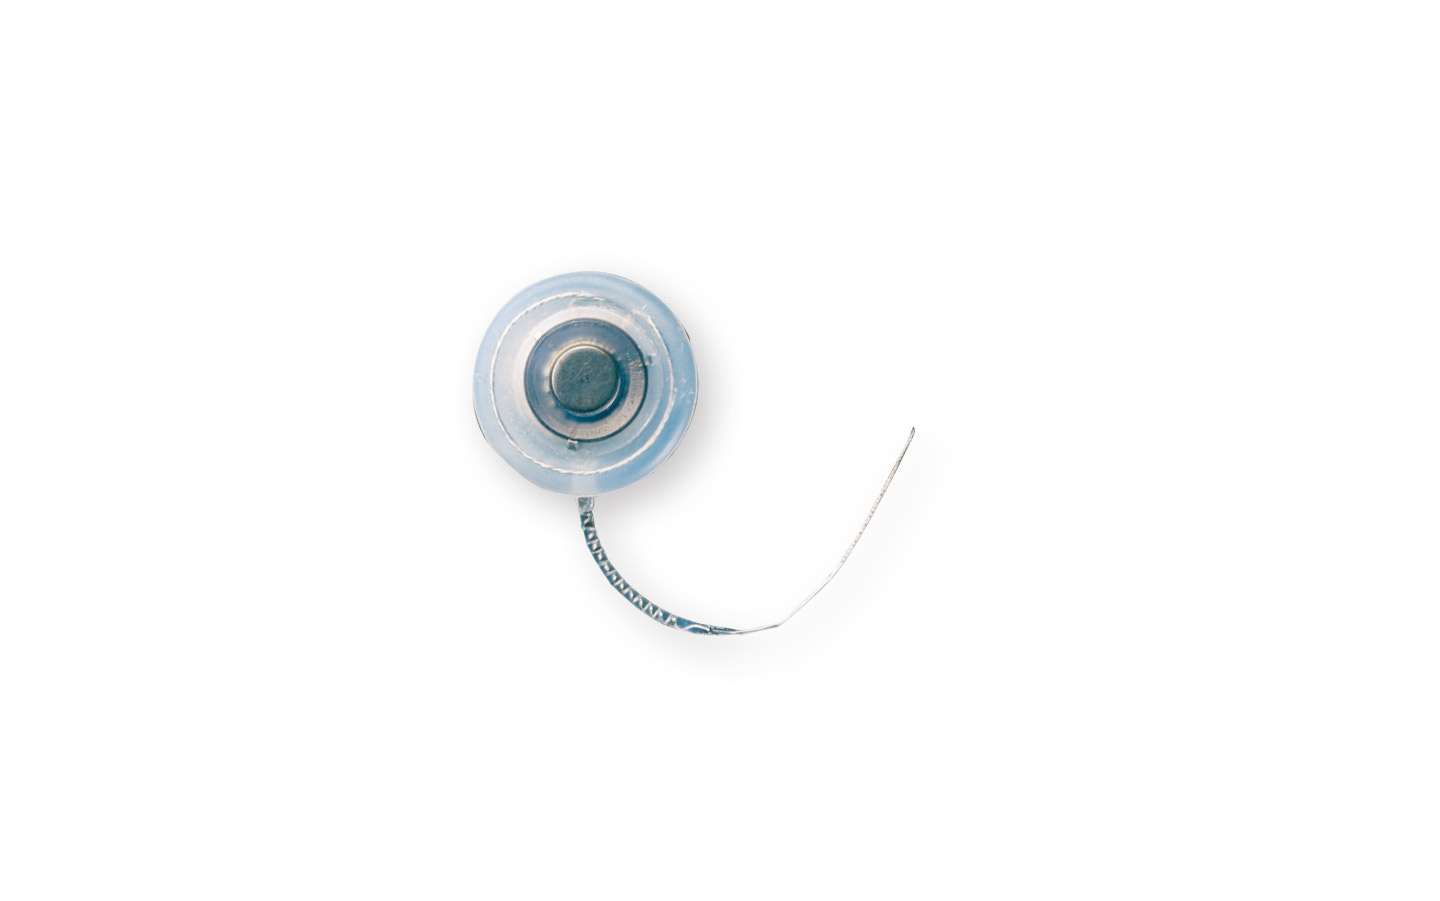 Ein mehrkanaliges Cochlea-Implantat